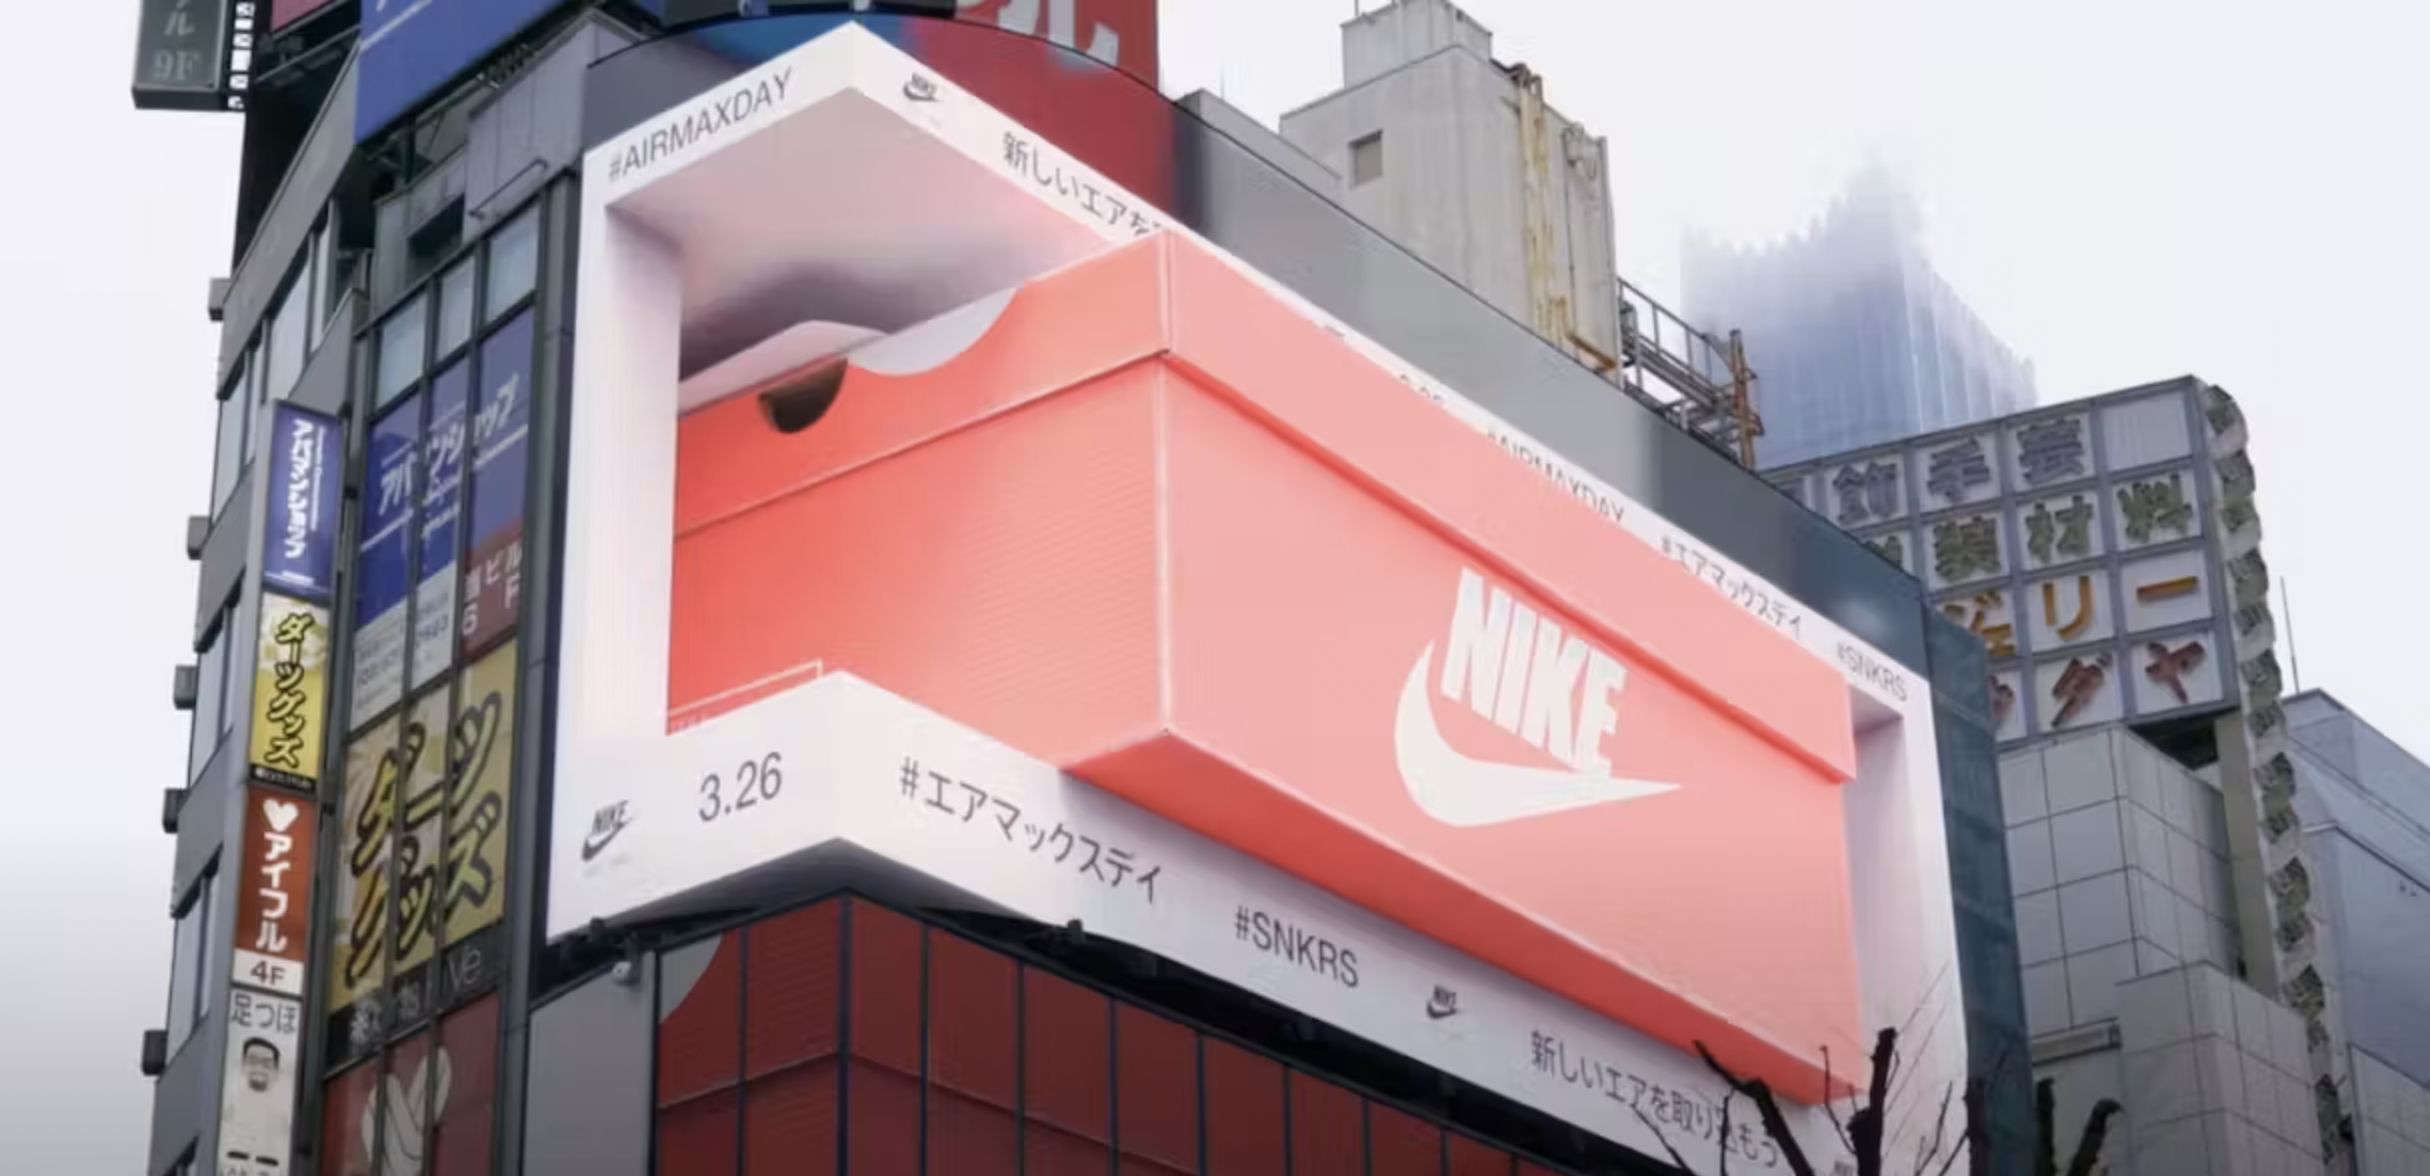 Nike 放置代表性的橘紅色鞋盒在廣告看板上，增加品牌印象 (資料來源)